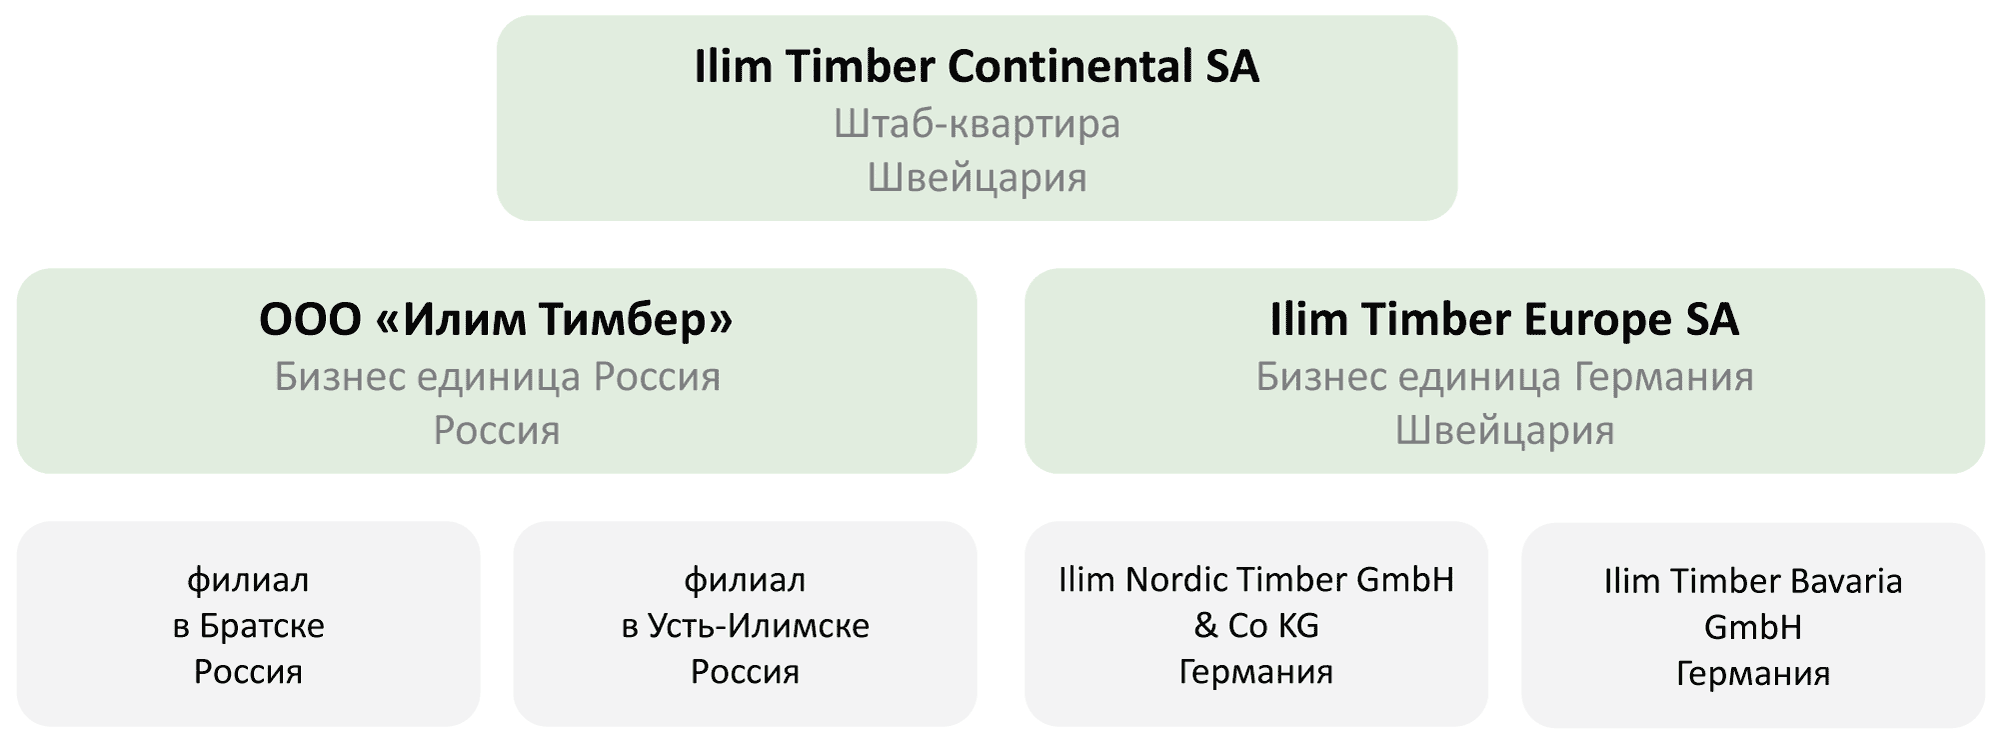 Органзиационная структура Ilim Timber